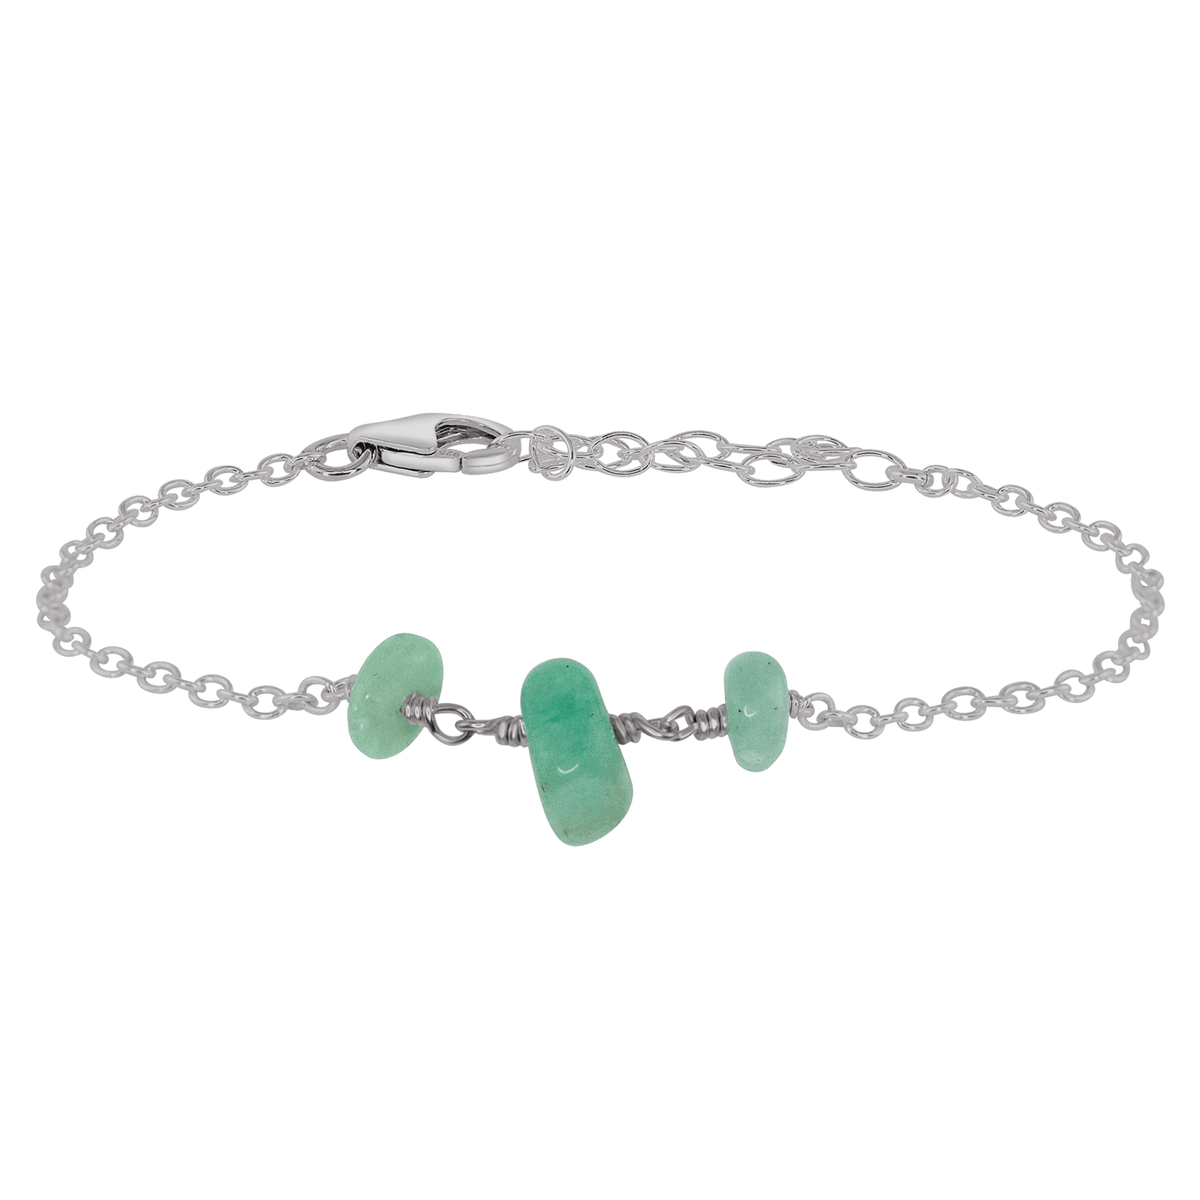 Beaded Chain Bracelet - Amazonite - Stainless Steel - Luna Tide Handmade Jewellery